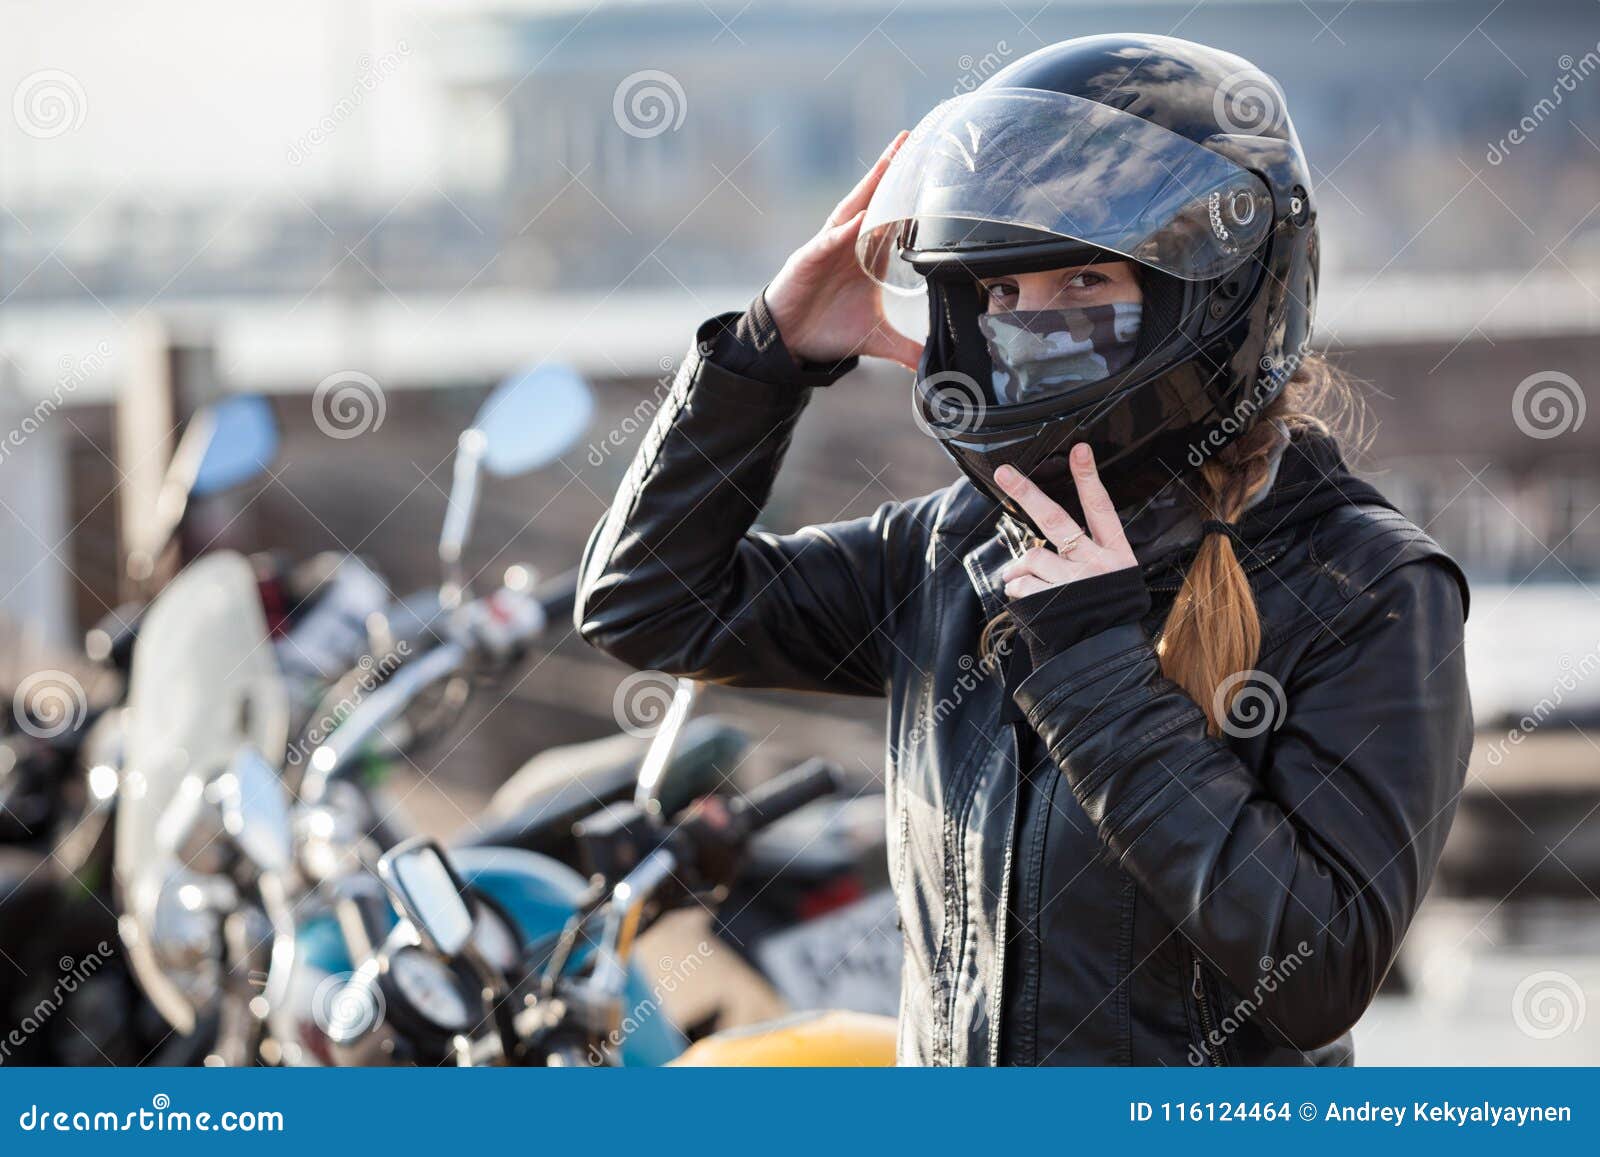 young girl biker trying black motorcycle helmet for ride on bike